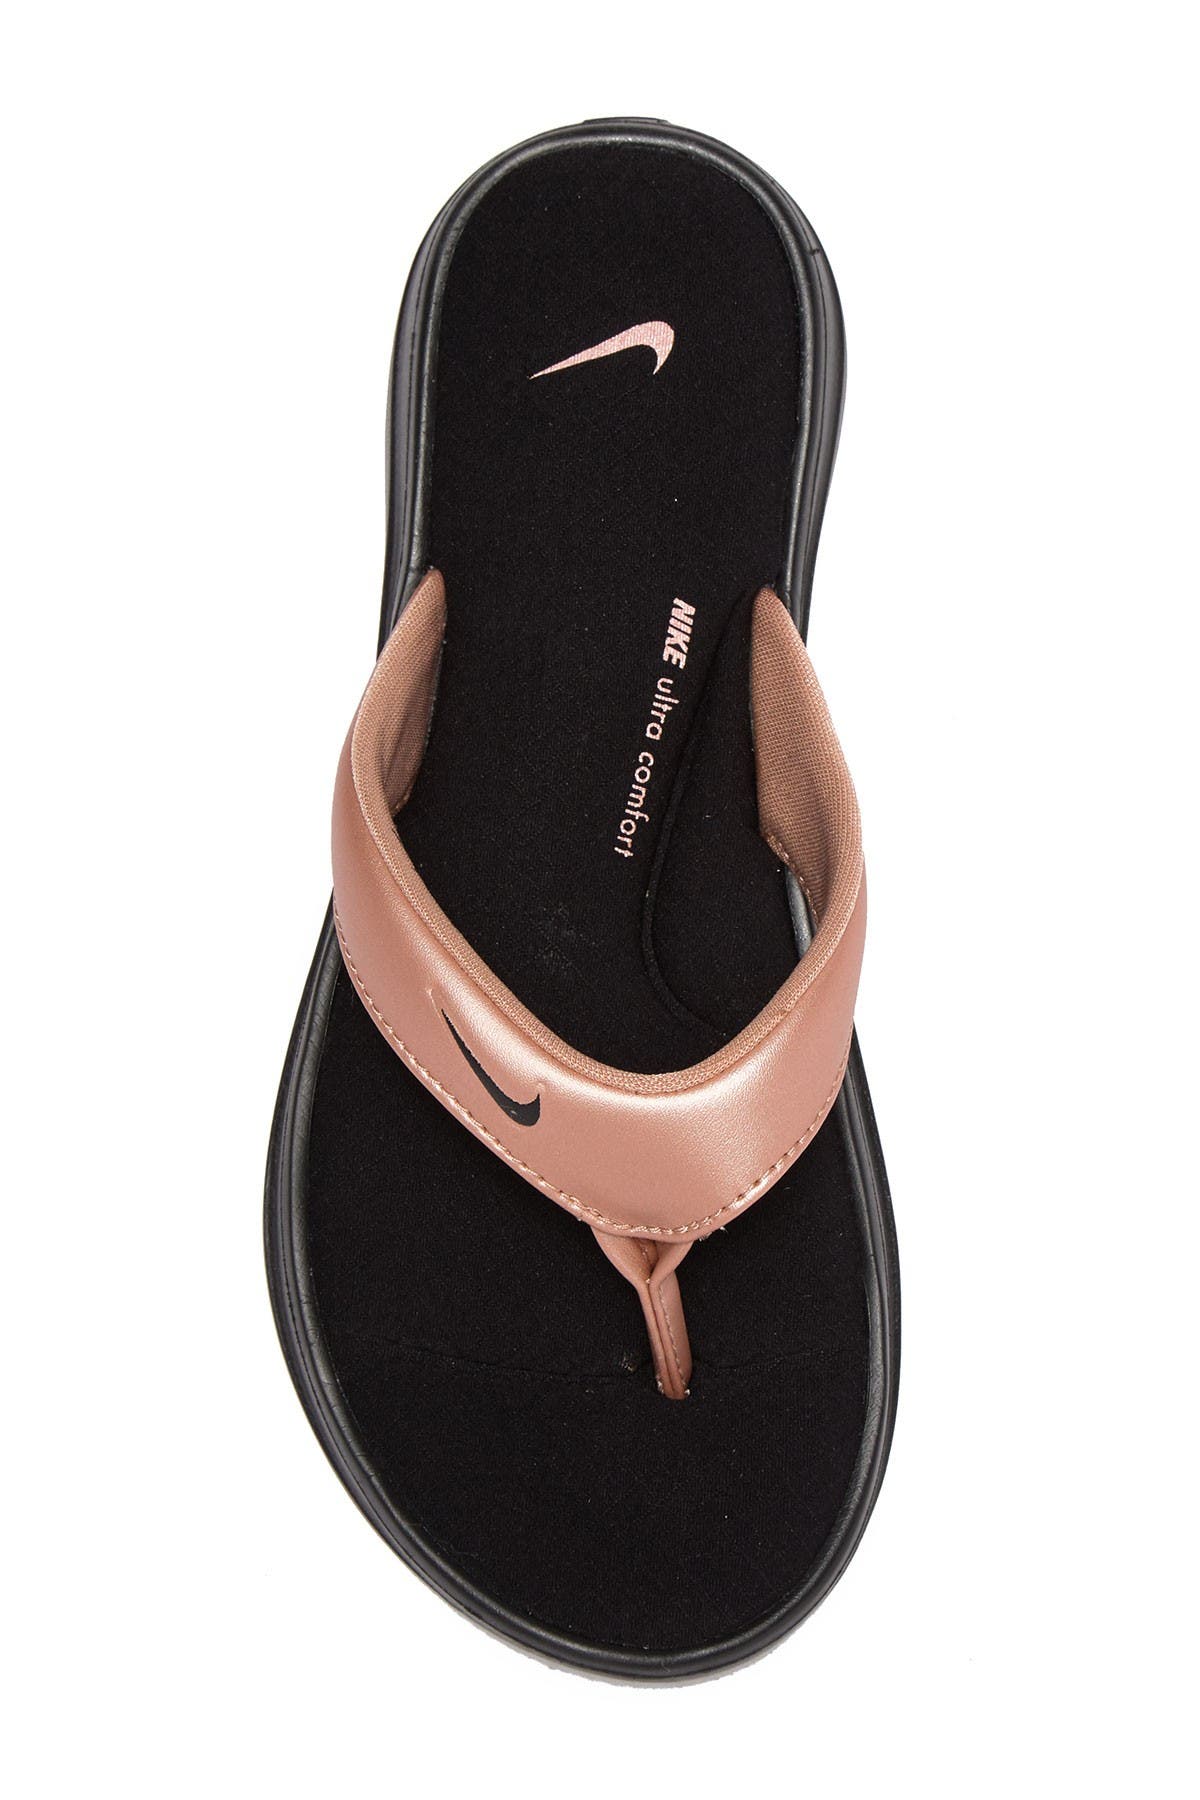 ultra comfort nike sandals